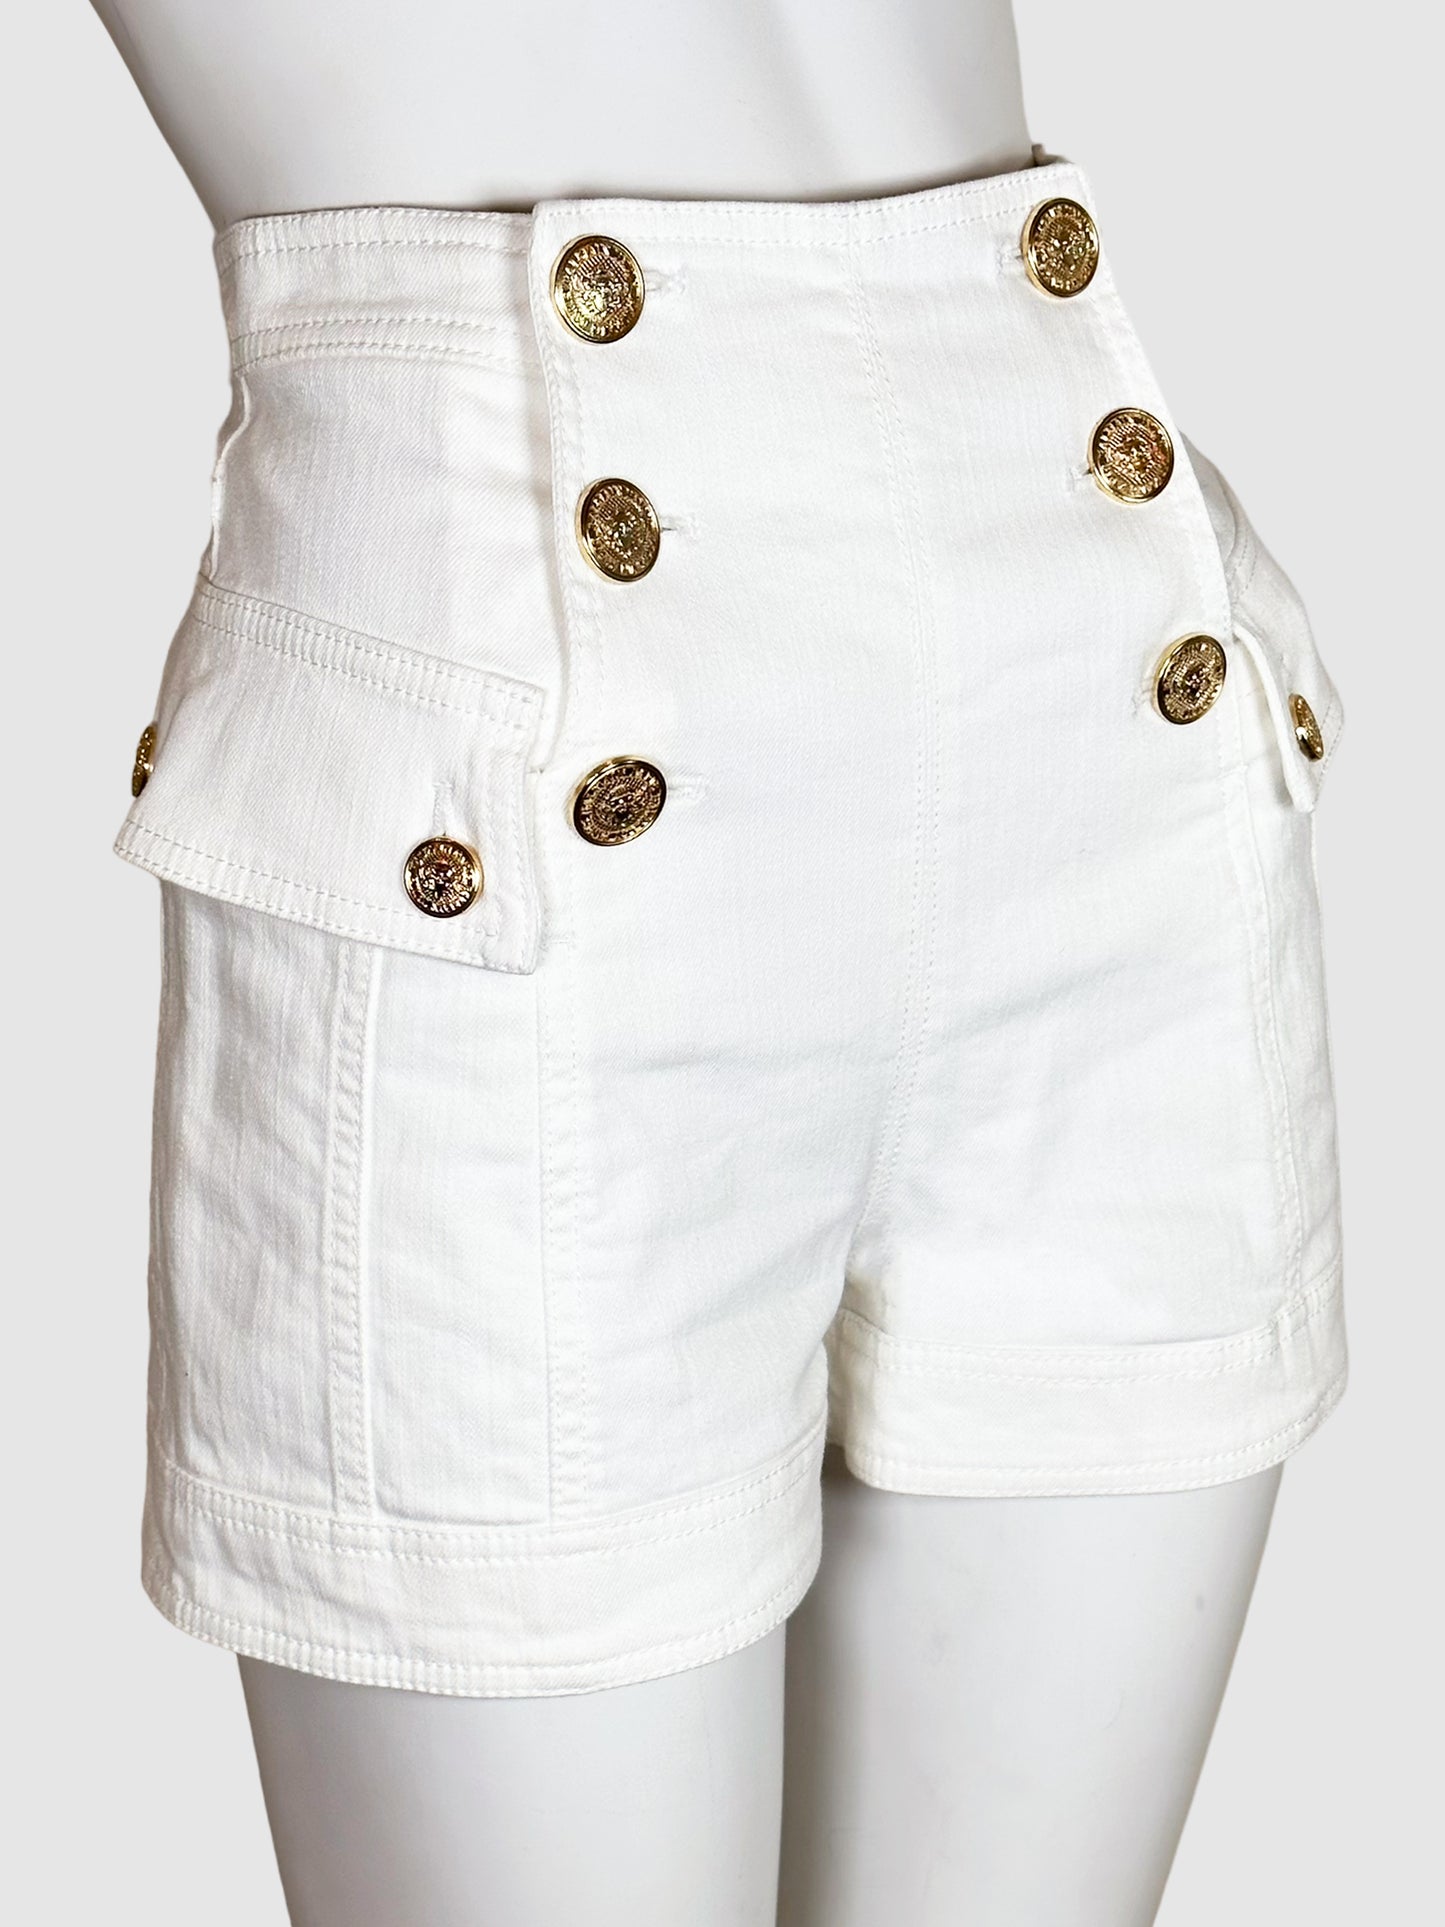 Balmain White Shorts - Size 34